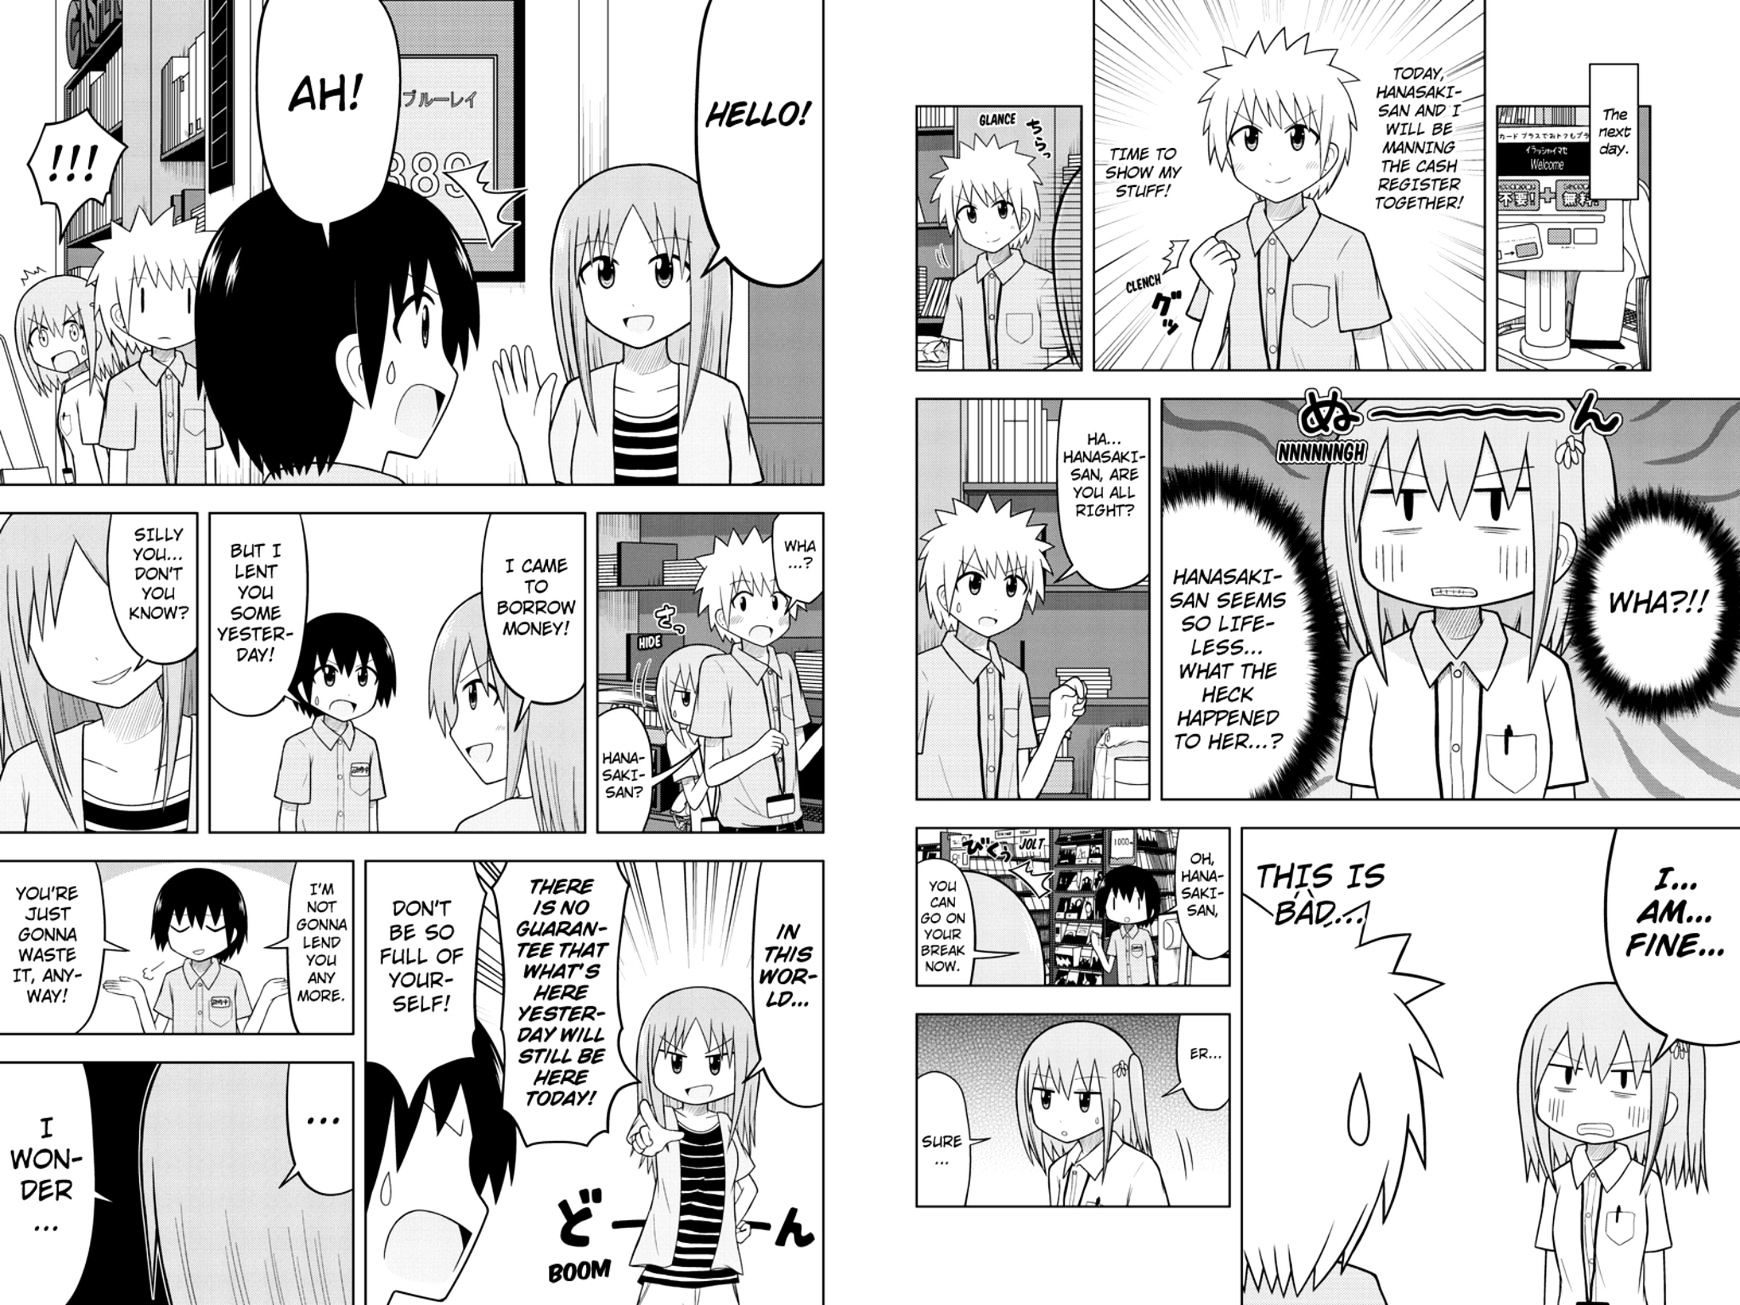 Sentirental Shoujo - Page 3